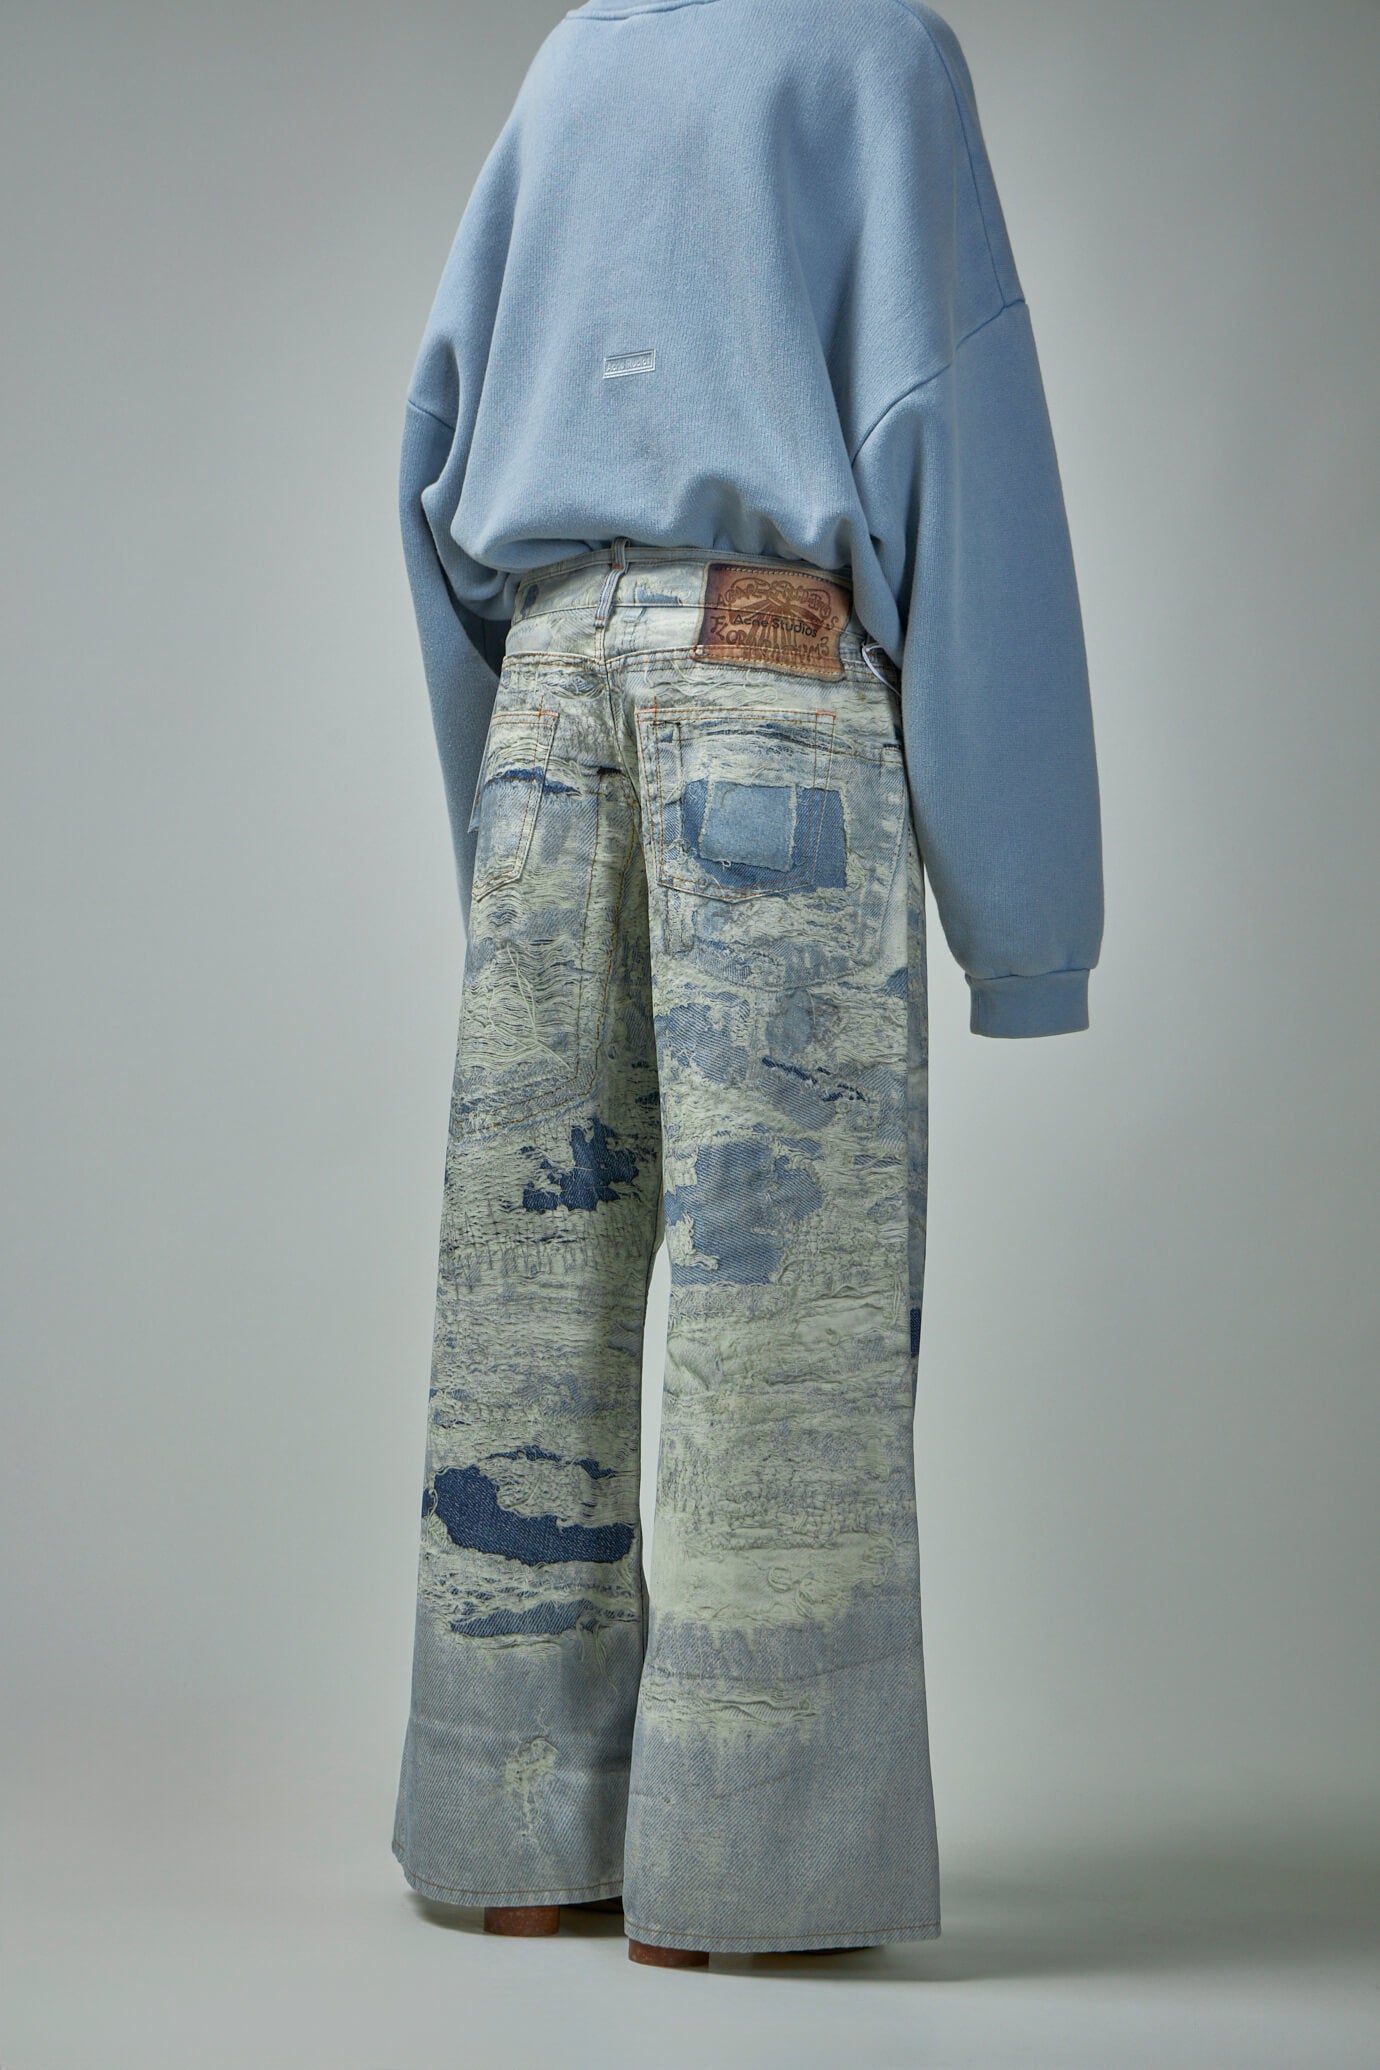 Buy Unused Denim Jeans (Indigo) Online at UNION LOS ANGELES